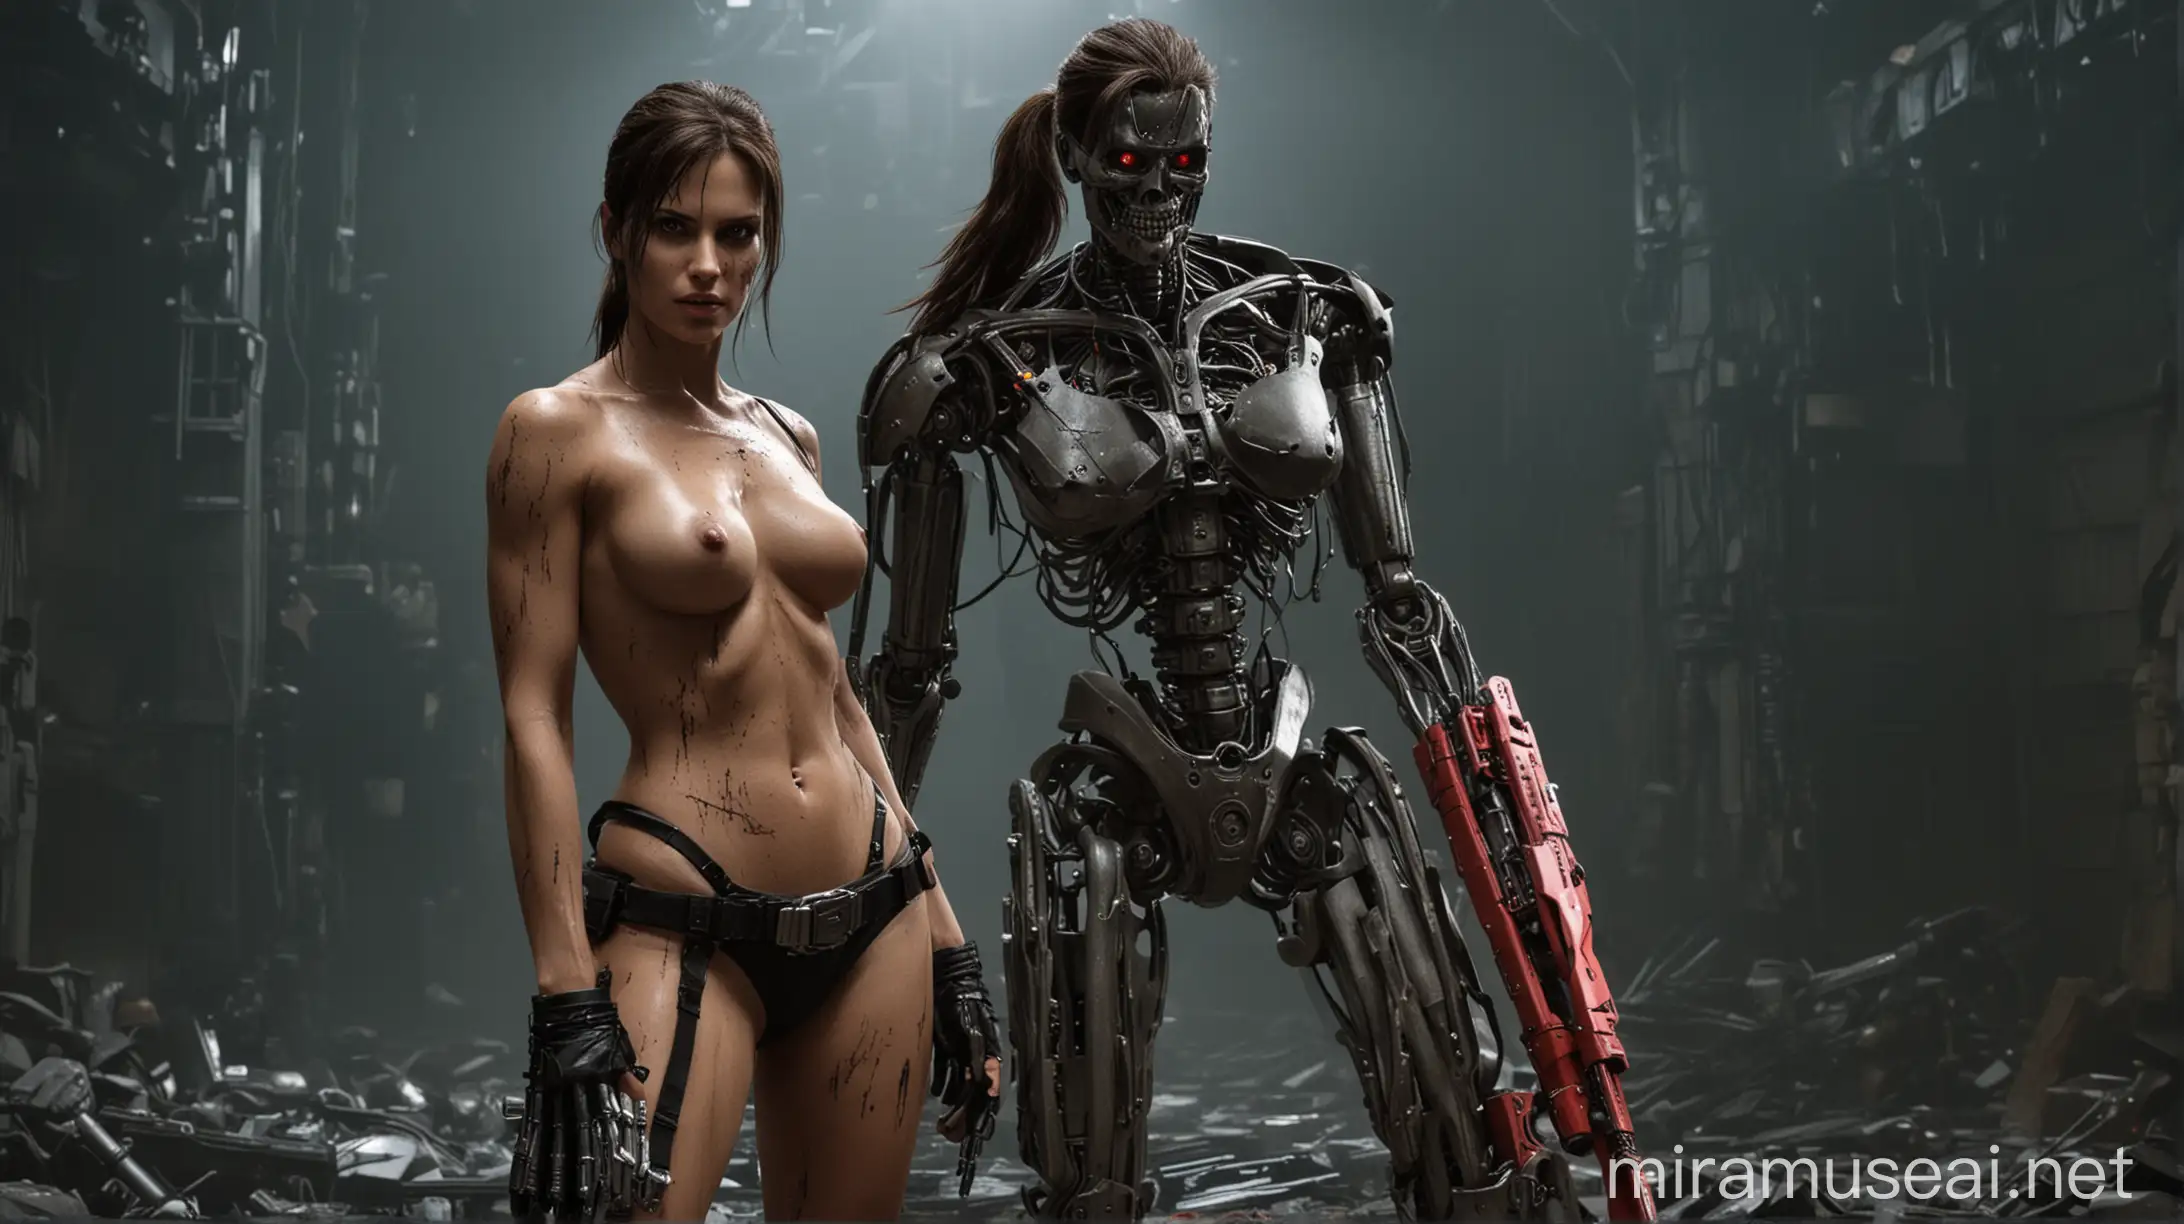 Lara Croft Terminator Fusion Cybernetic Nude Warrior in Futuristic Landscape